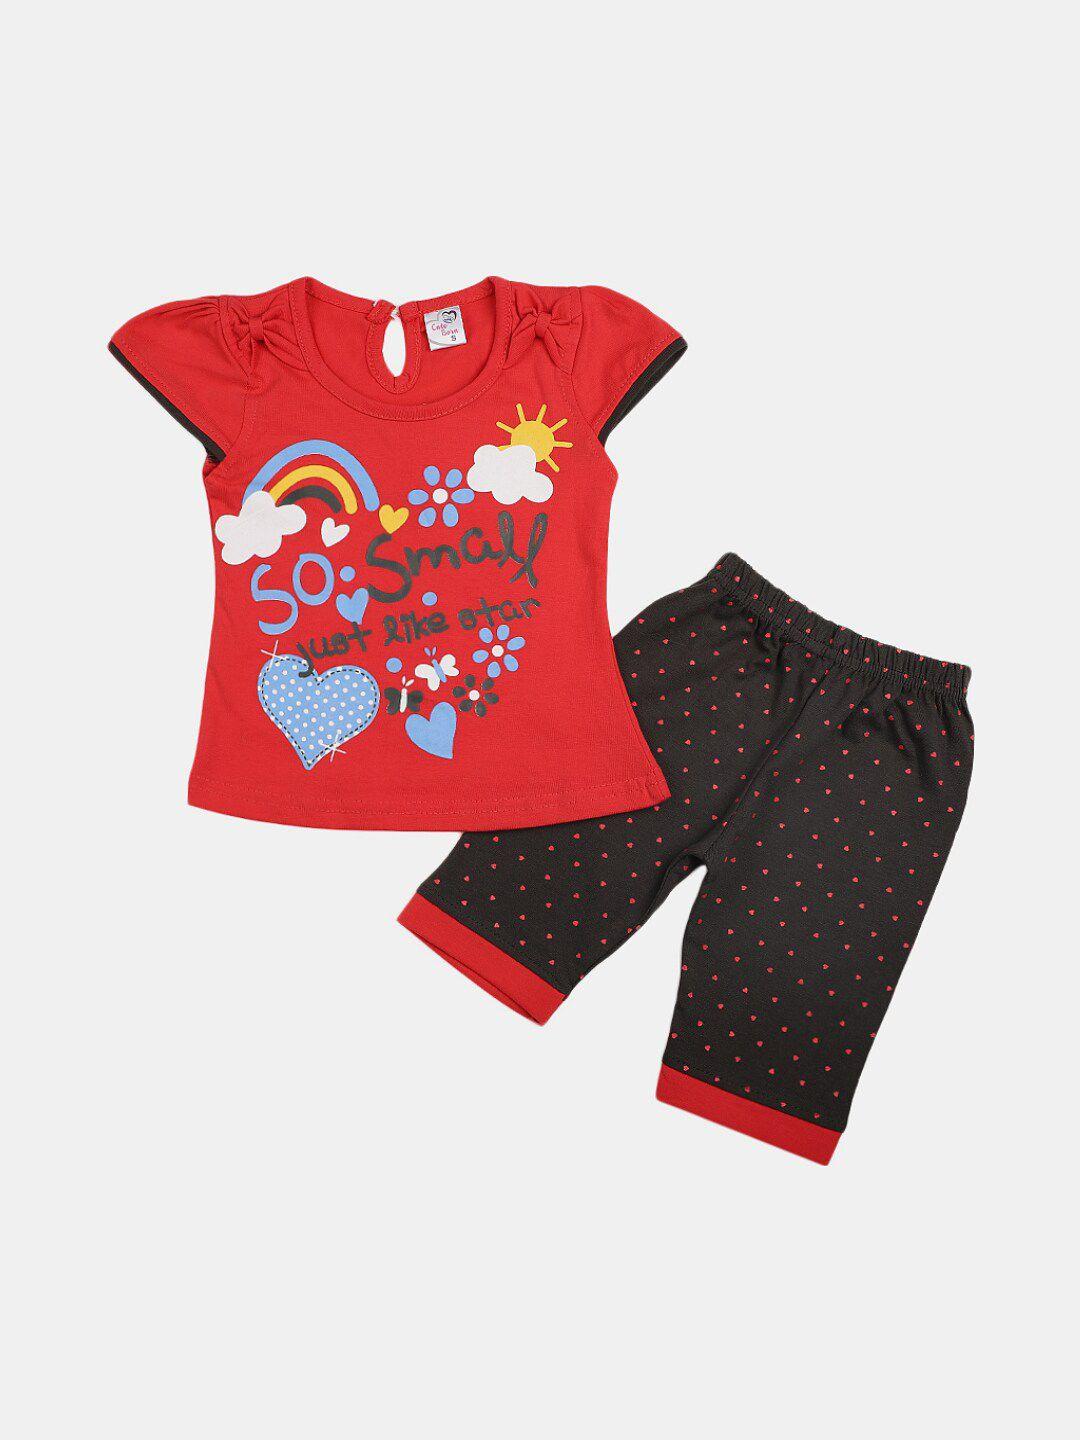 v-mart infant pure cotton printed top with pyjamas set